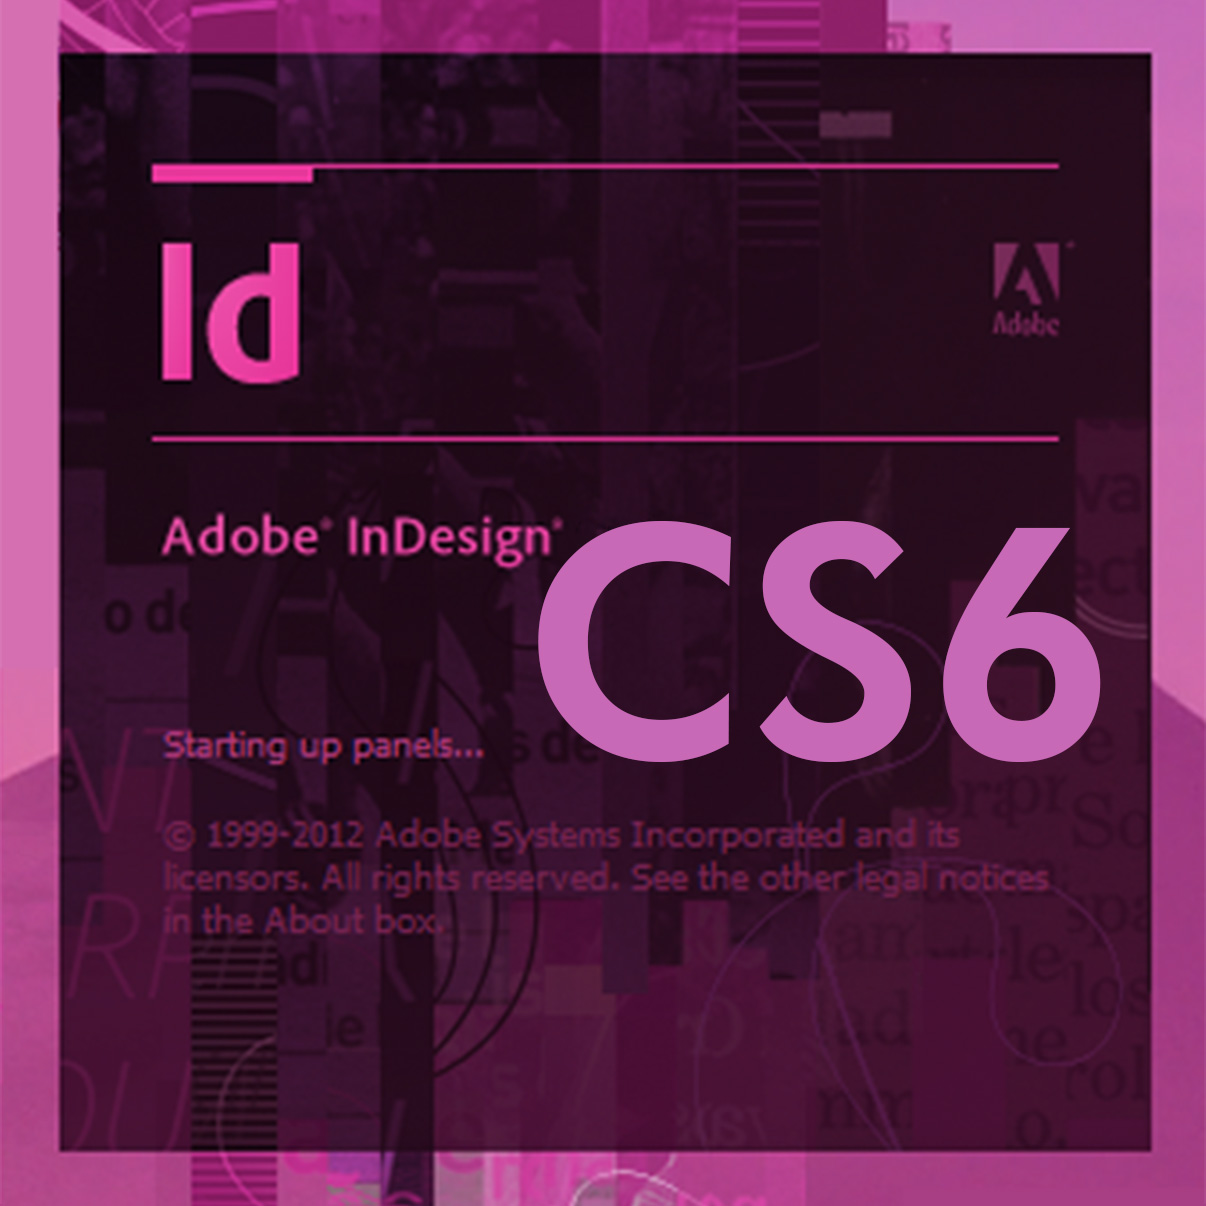 Adobe indesign cs6 free download full version - acetoglass